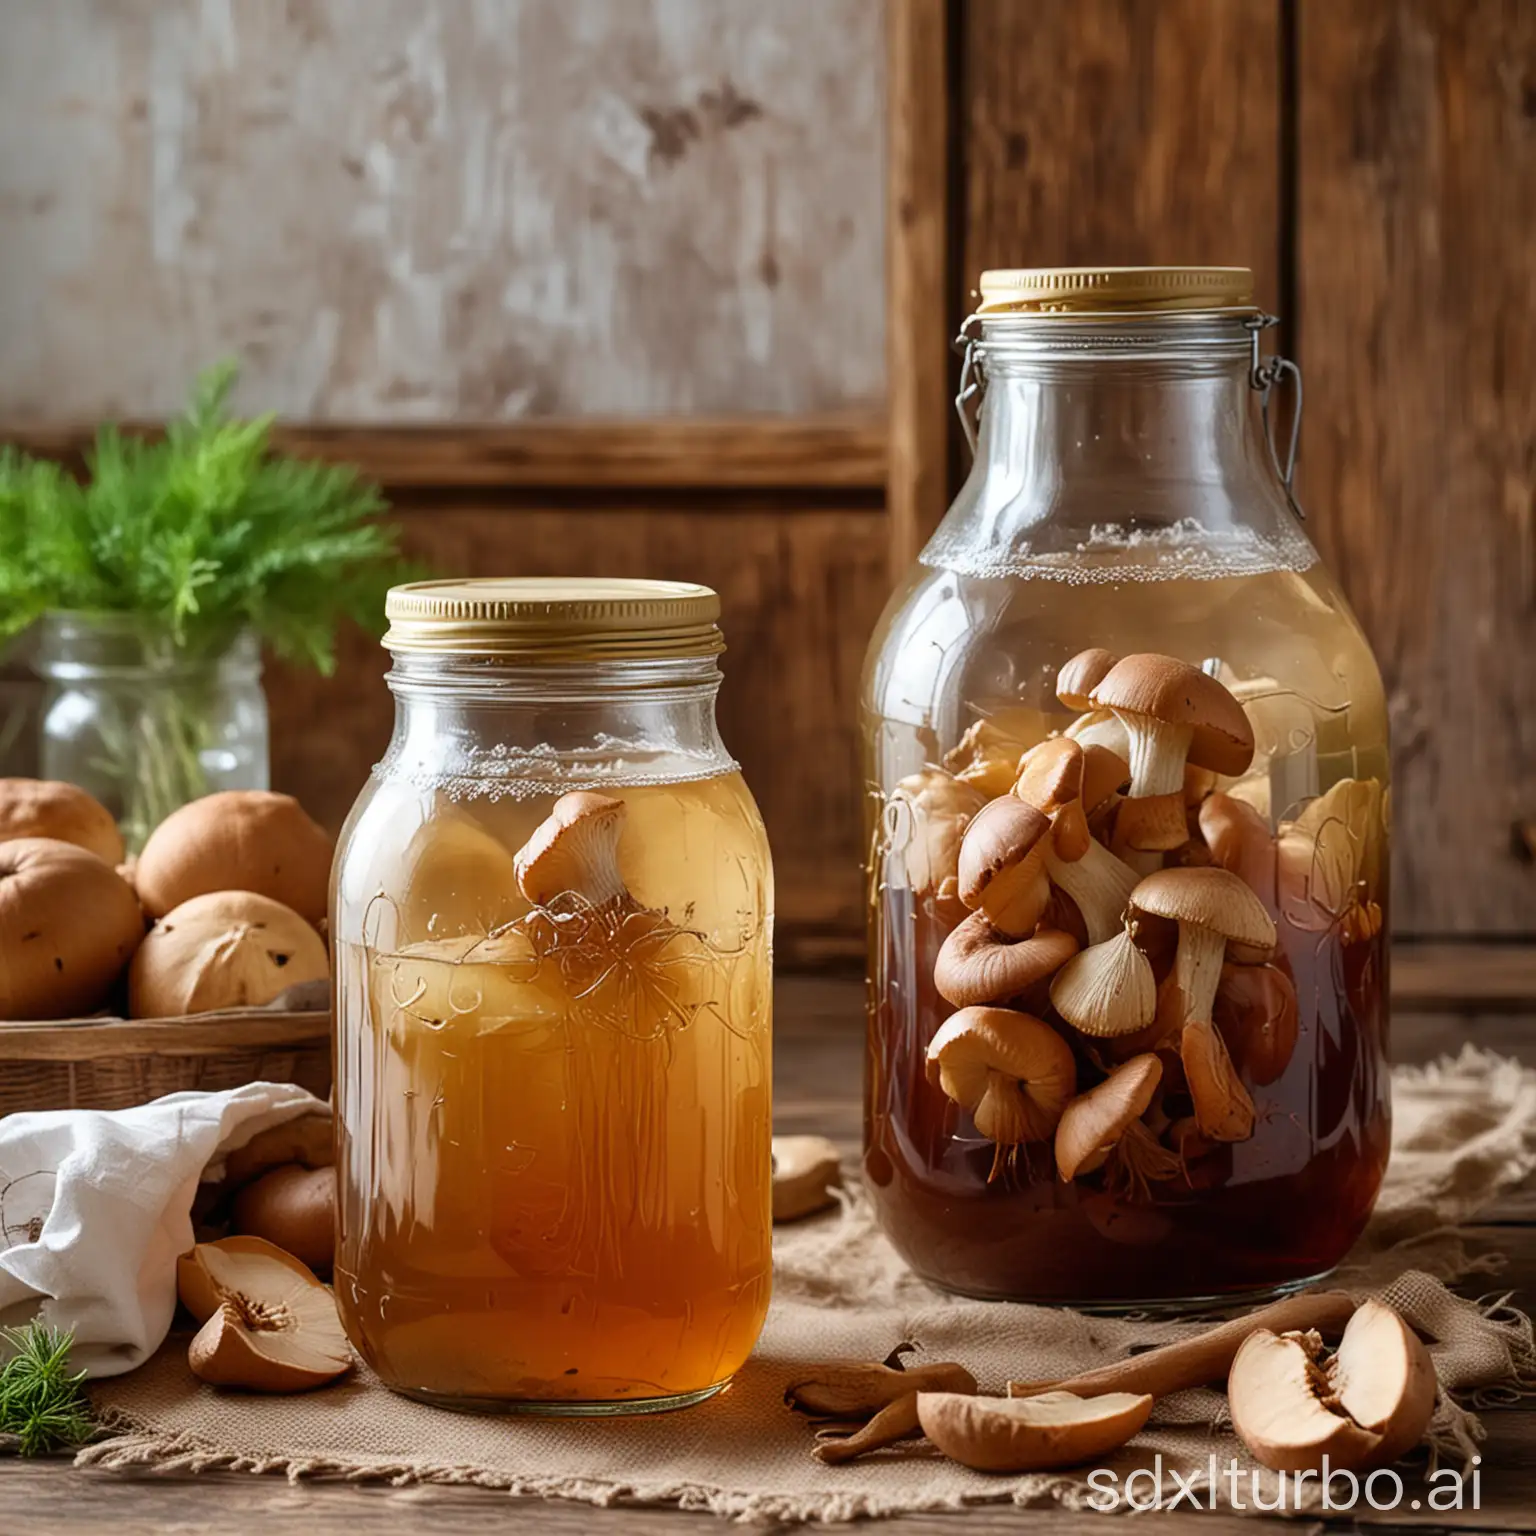 Russian-Kitchen-Scene-with-Kombucha-Jar-and-Boletus-Mushrooms